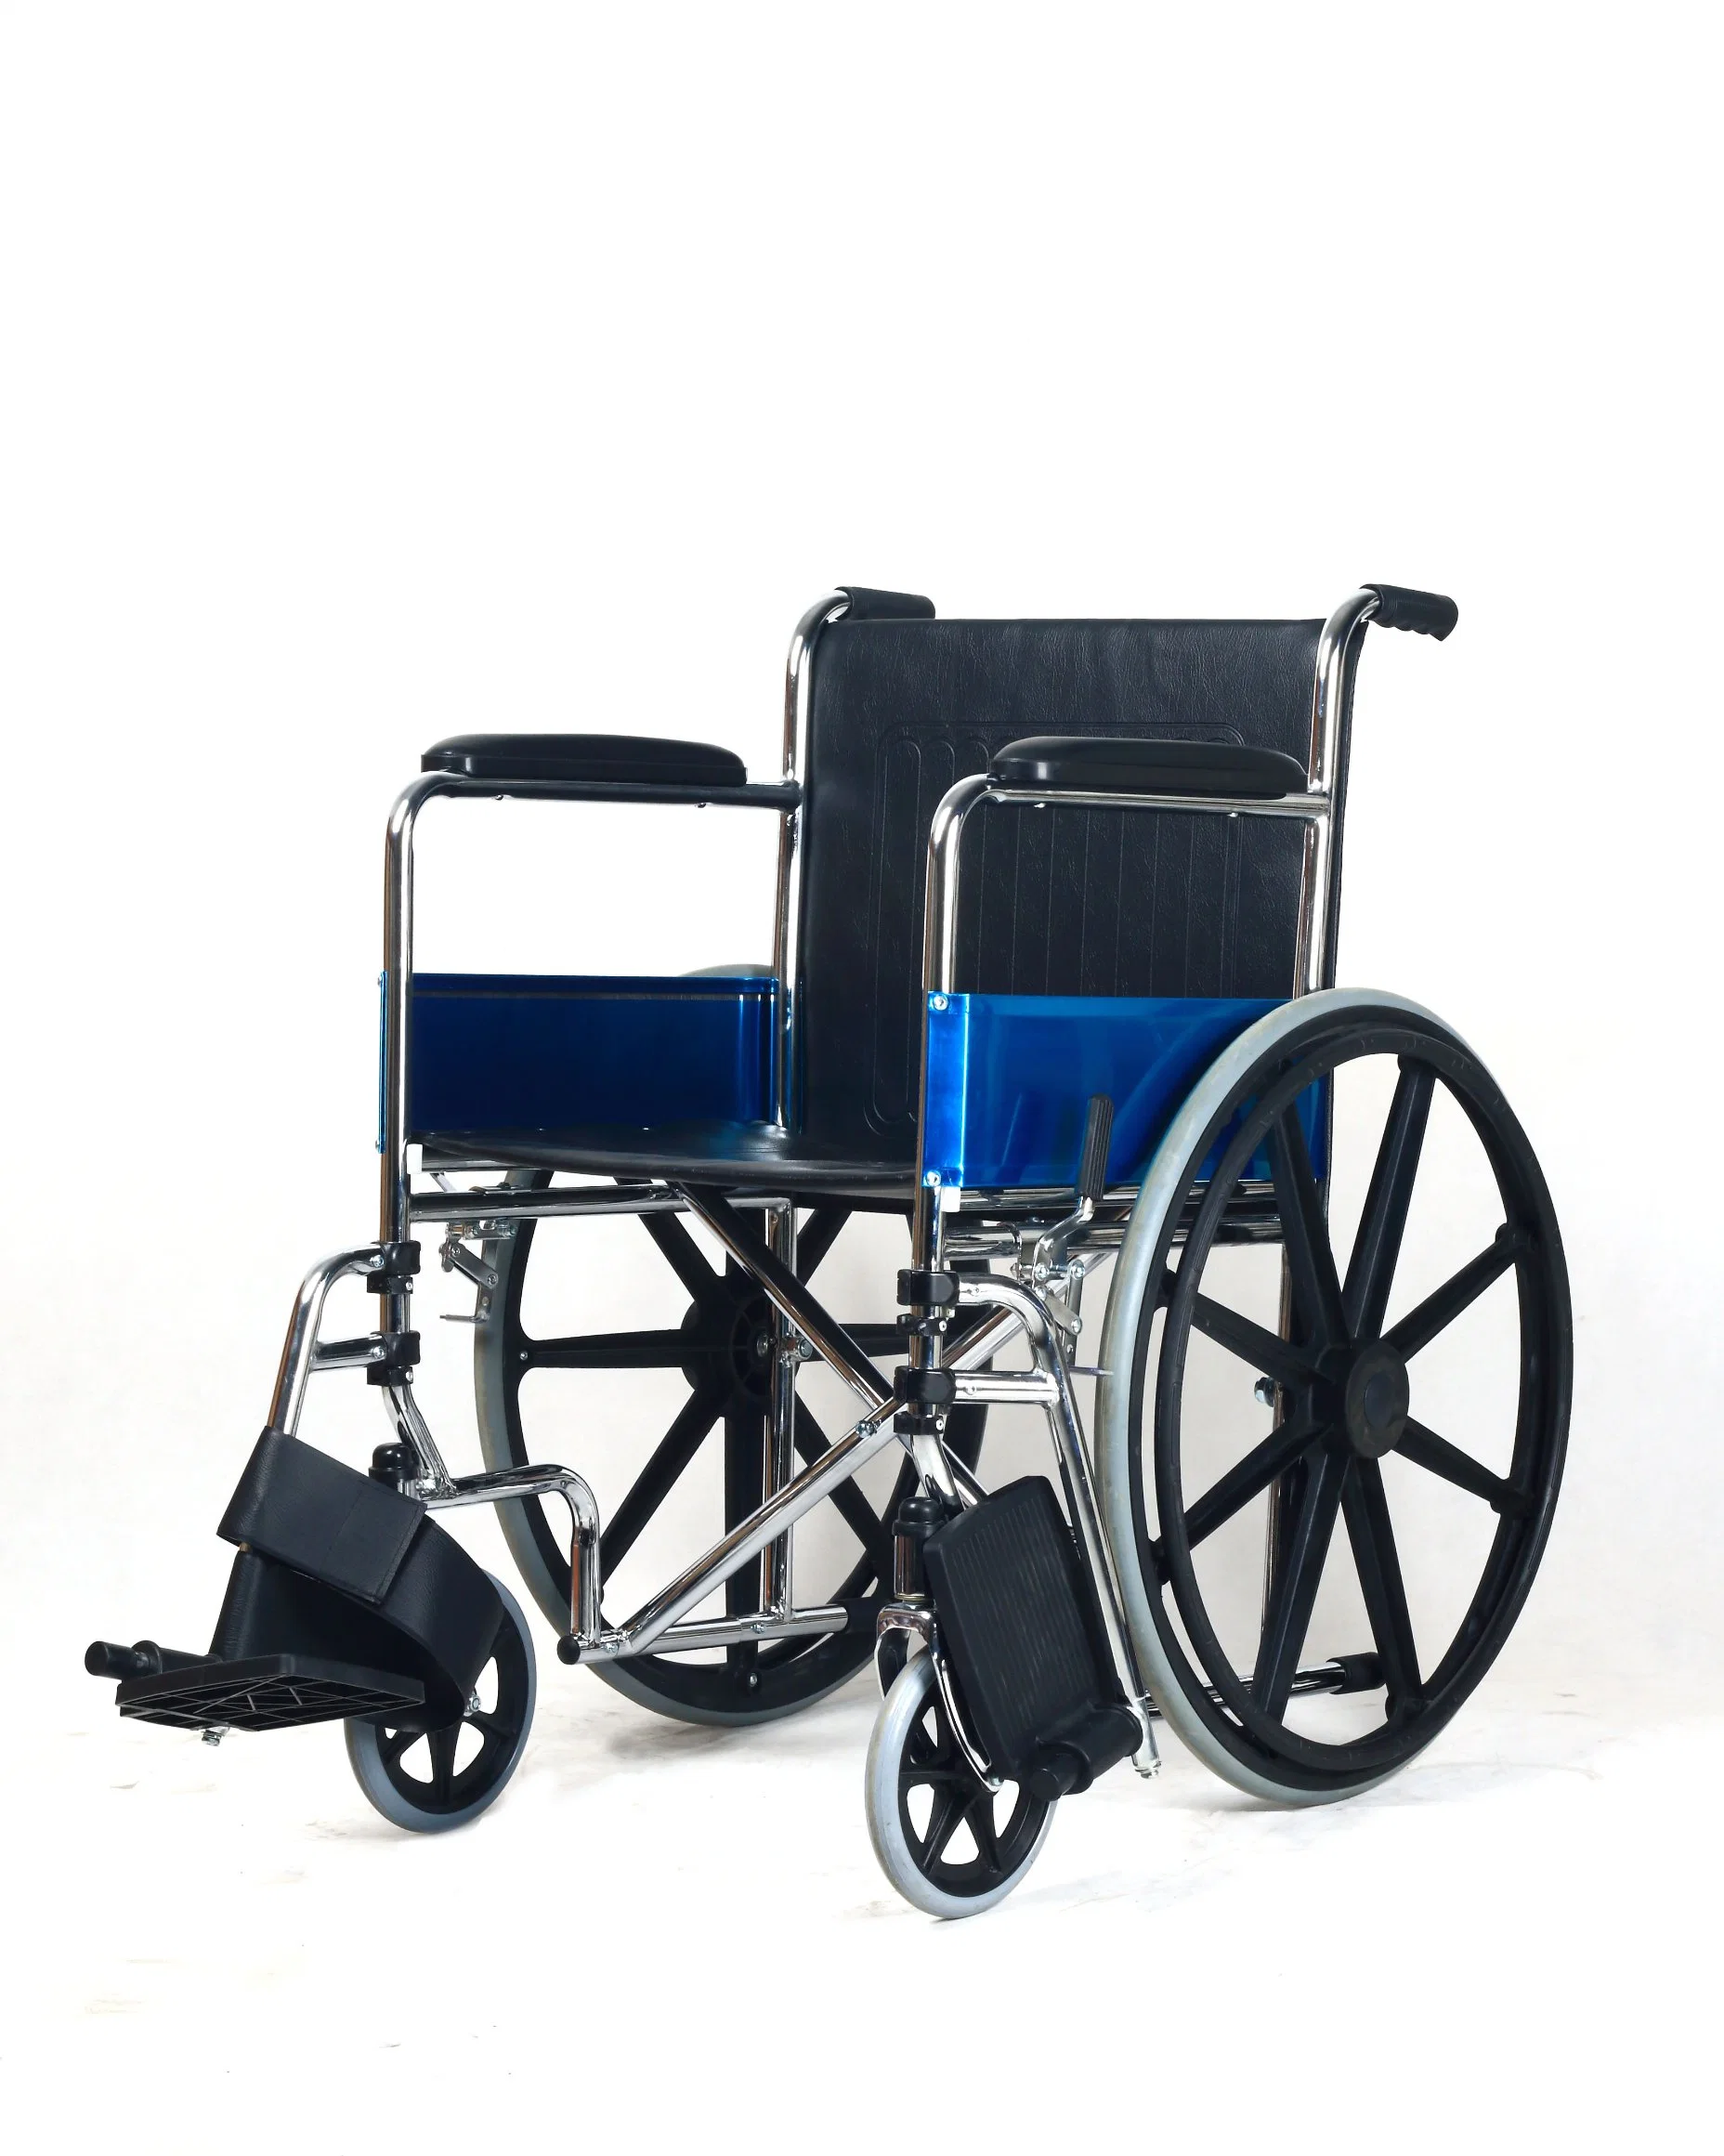 Achieve New Design with Patent Foorest Manual Steel Mag Wheel Folding Silla De Ruedas Wheelchair